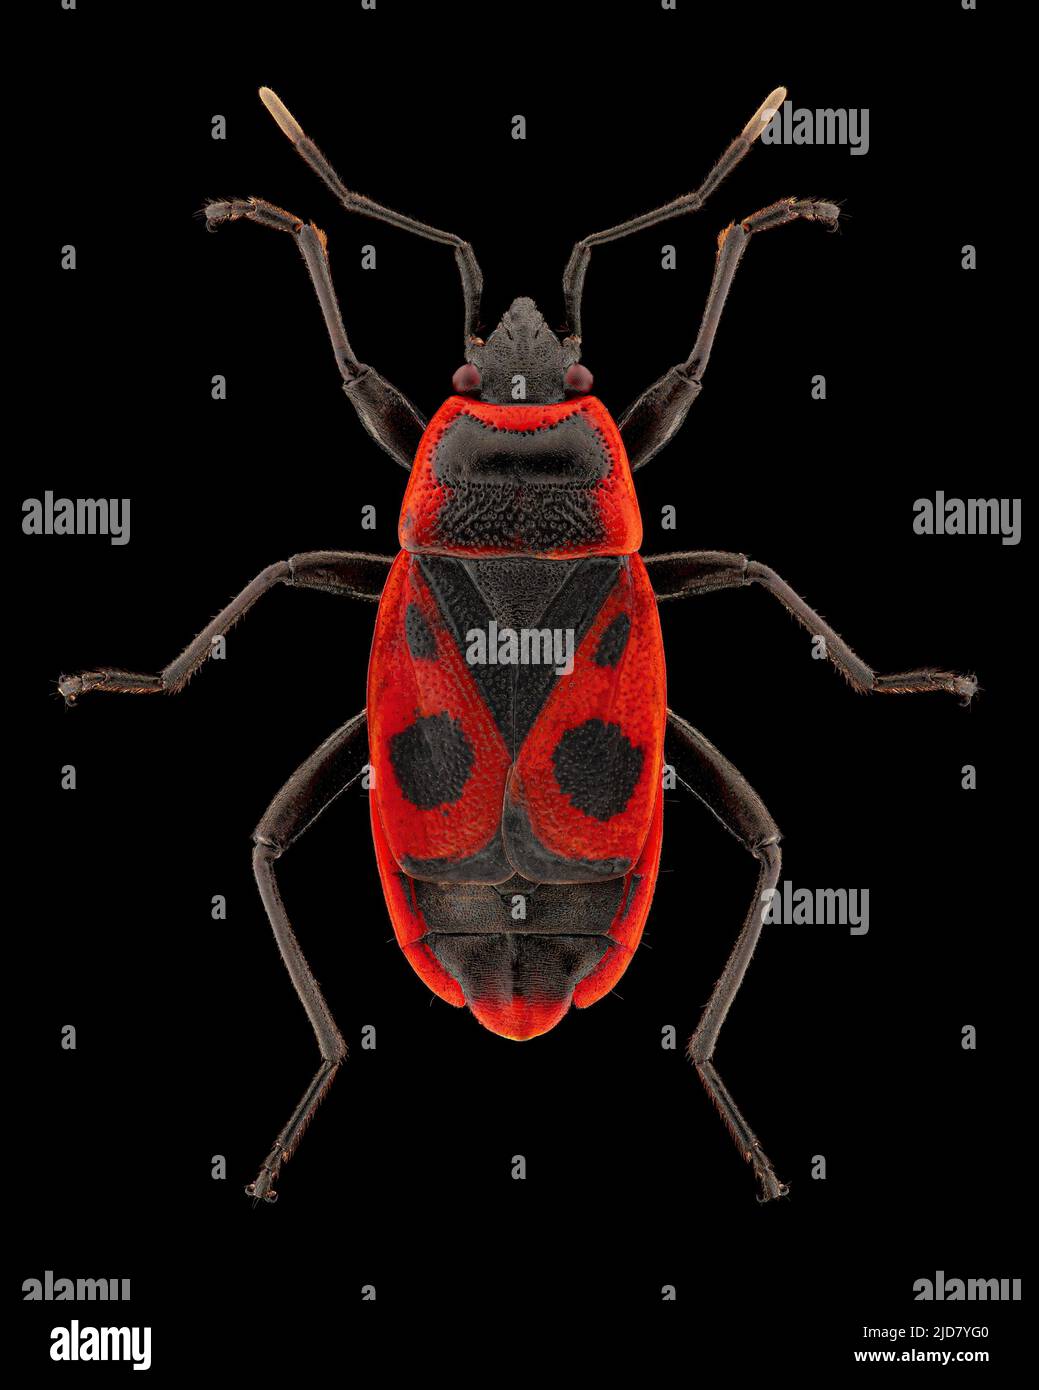 Firebug (Pyrrhocoris apterus) entomology specimen with spreaded legs and antennae isolated on pure black background. Studio lighting. Macro photograph Stock Photo